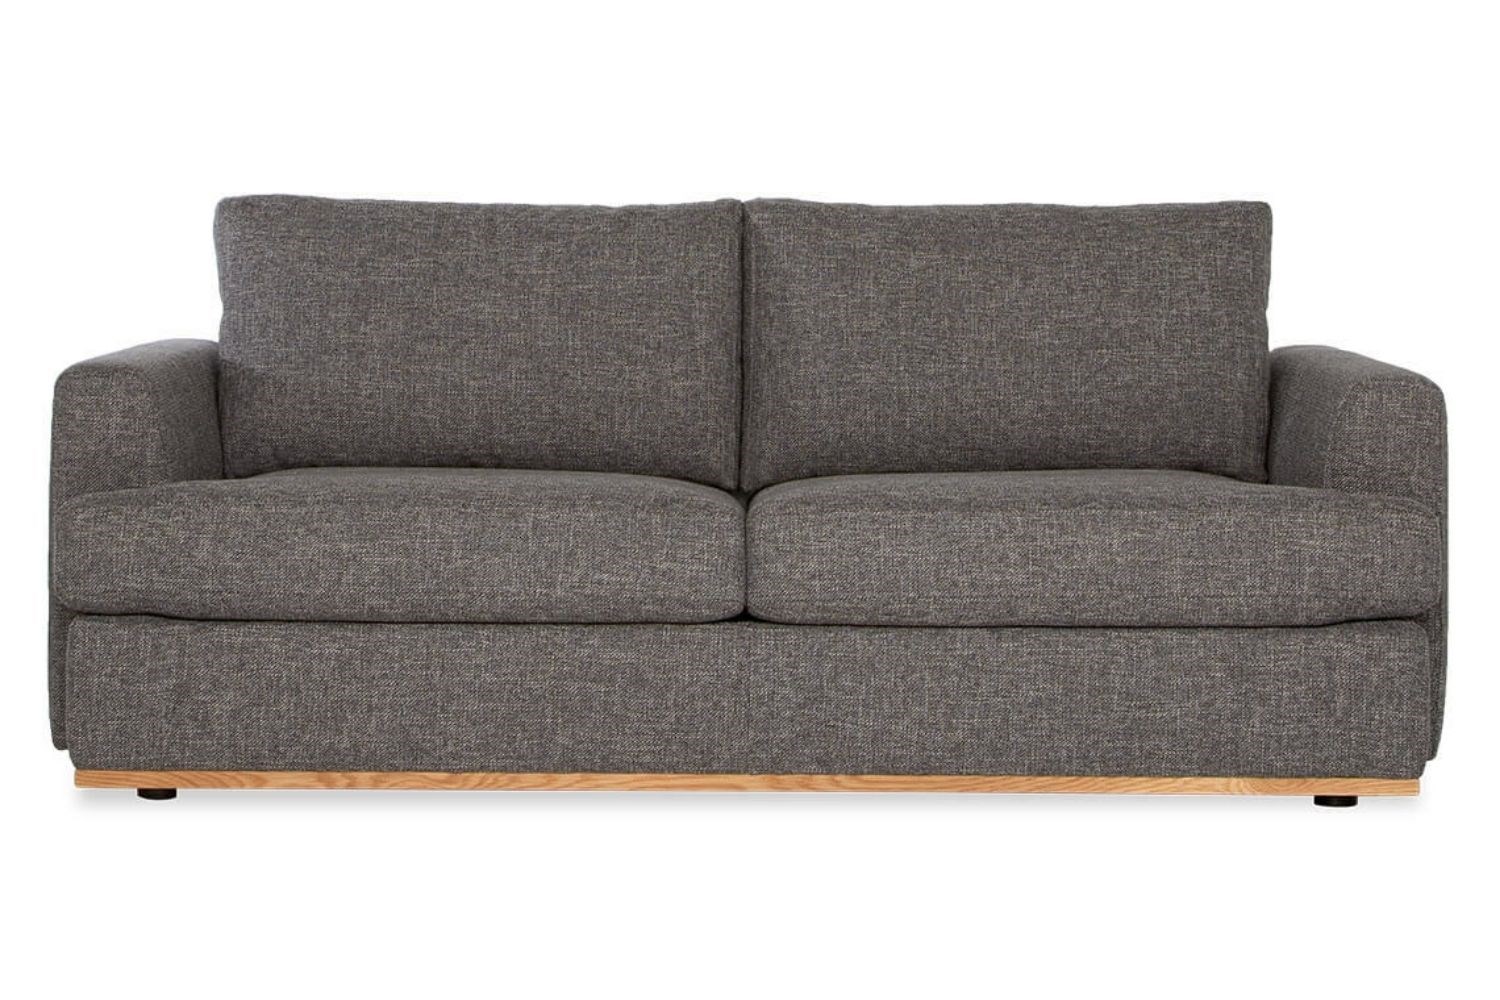 sofa bed sydney australia